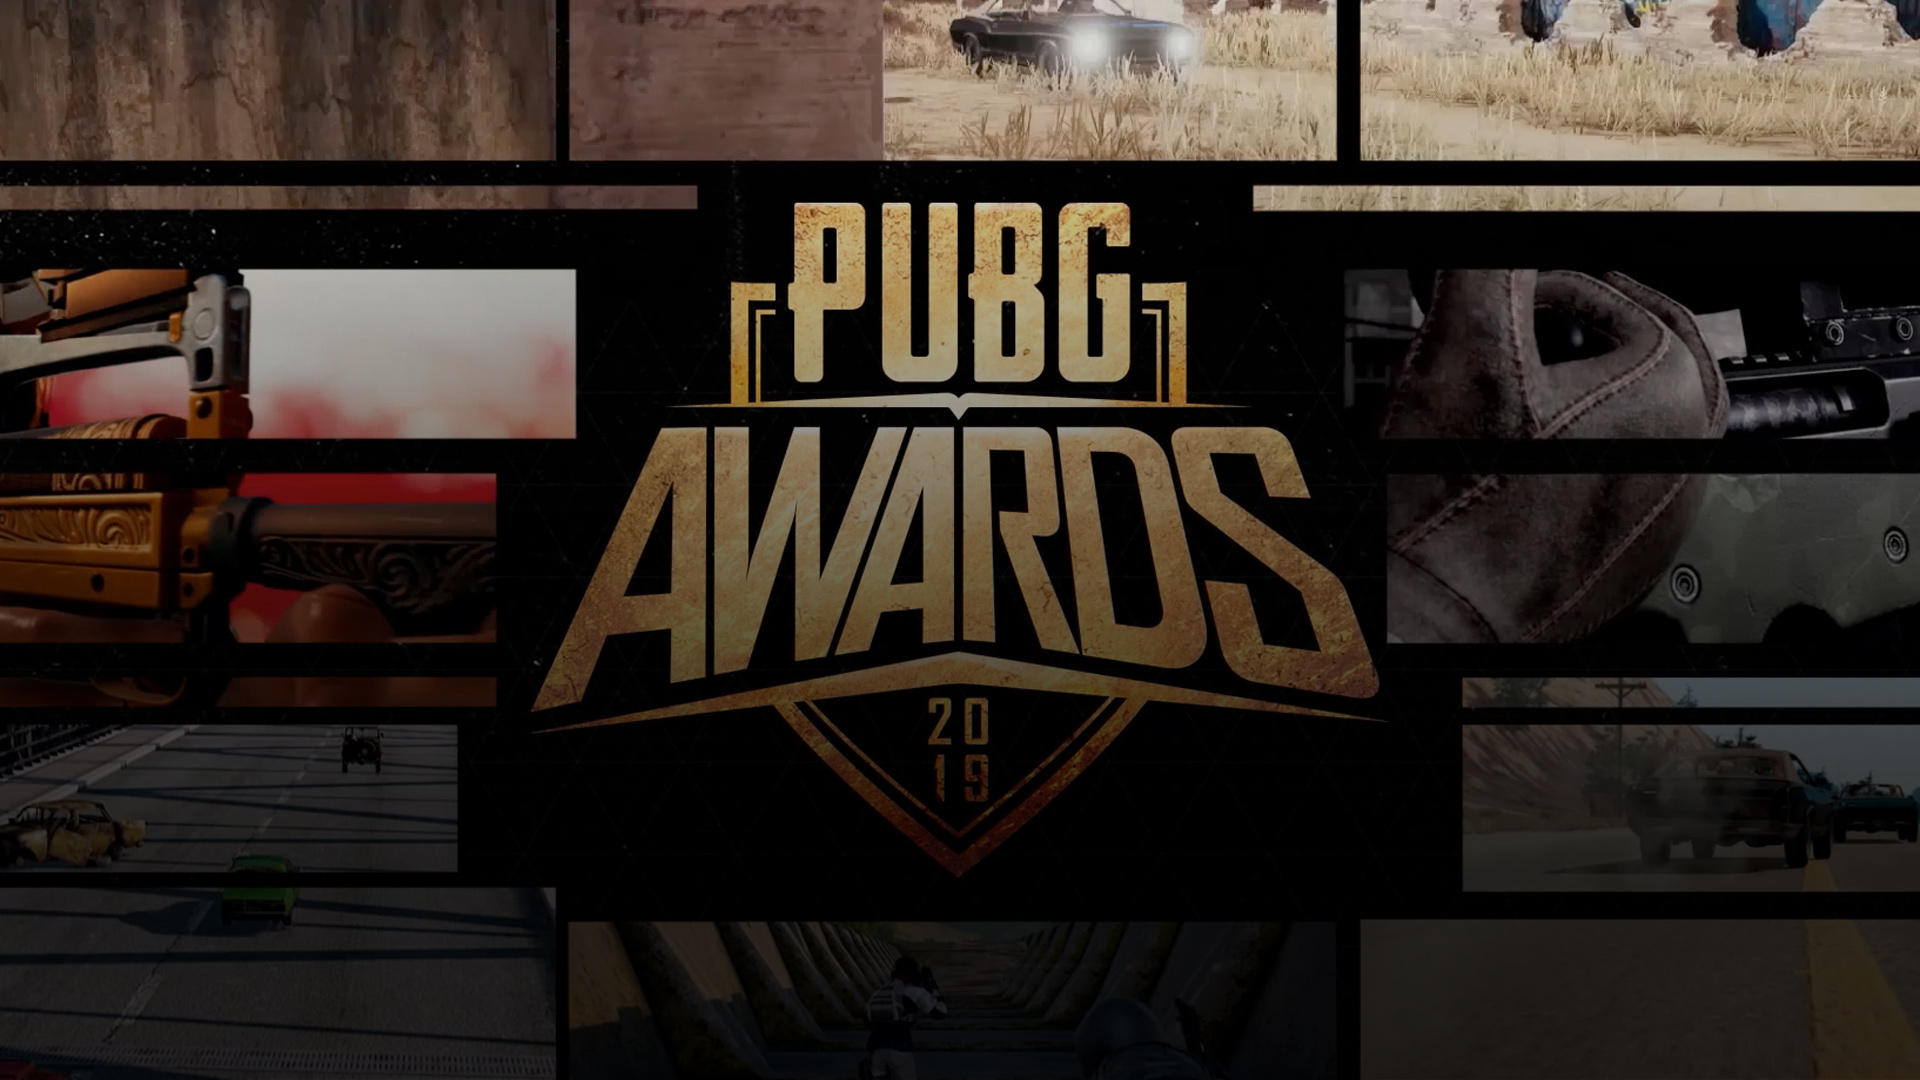 PUBG Awards